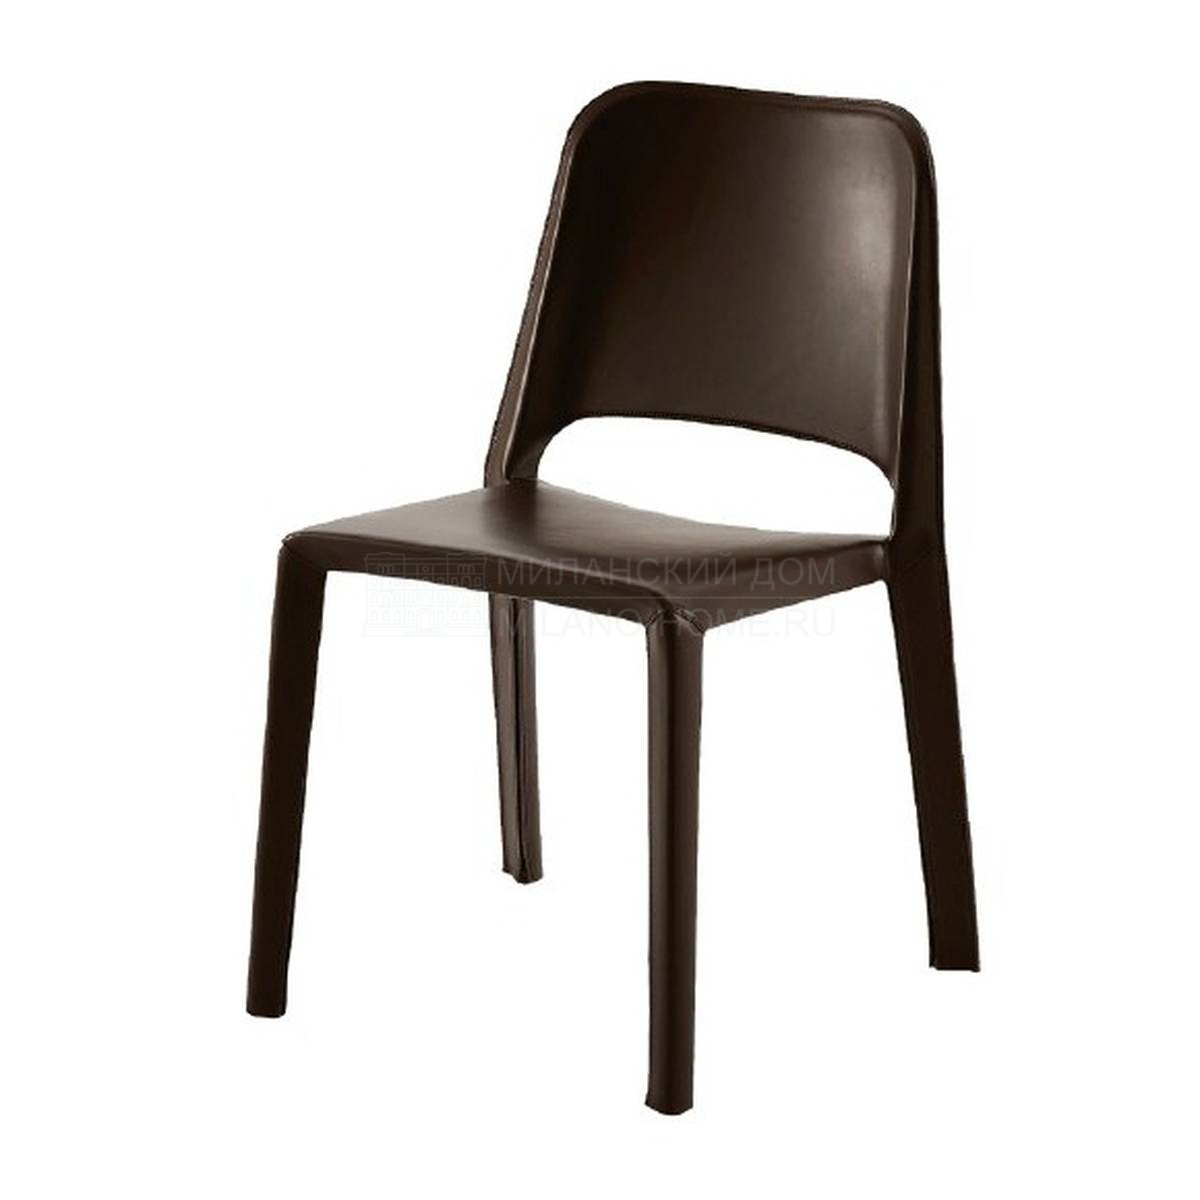 Кожаный стул Kate 2089 leather из Италии фабрики ZANOTTA